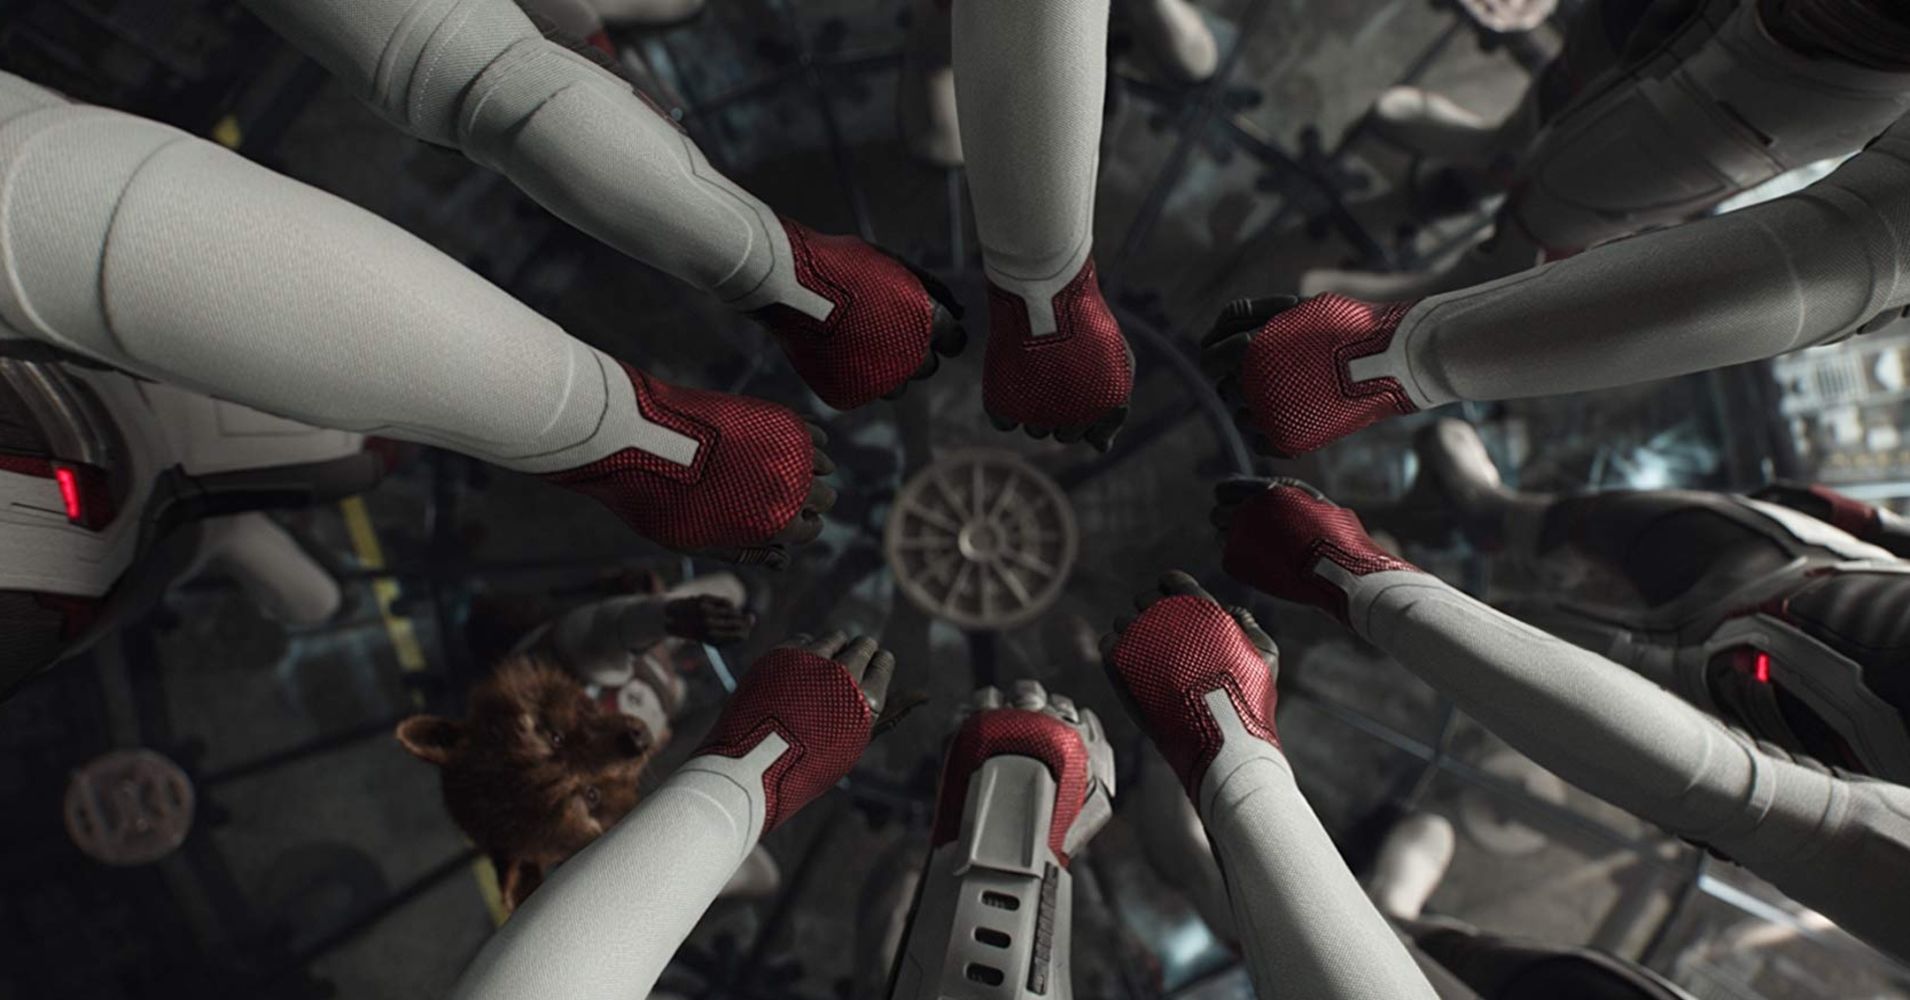 Disney CEO says Avengers Endgame has clues about Marvel's future films